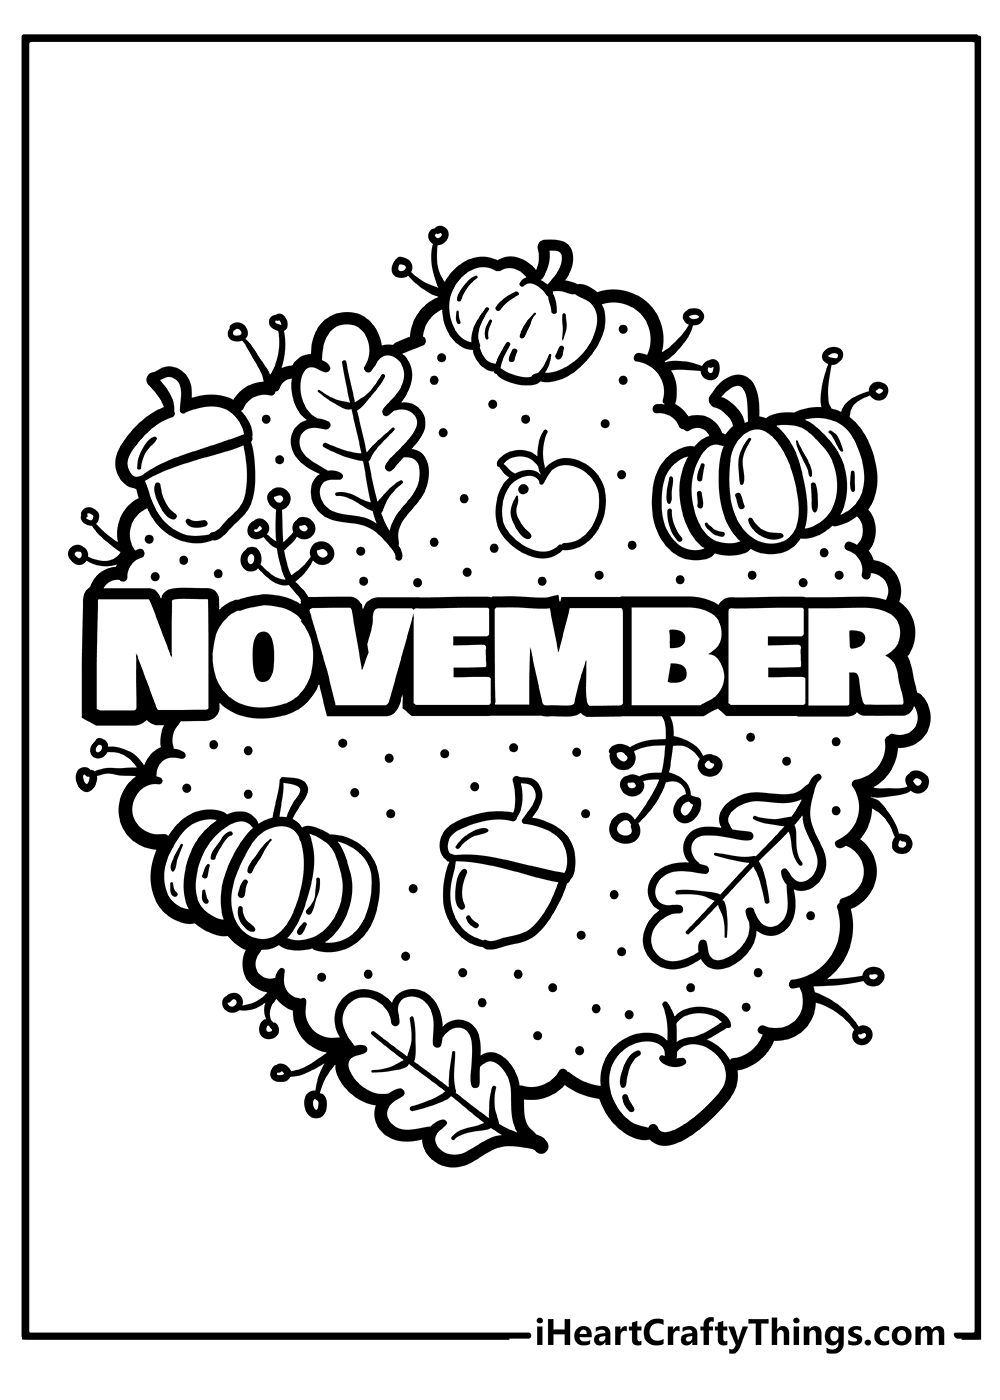 November Coloring Original Sheet for children free download